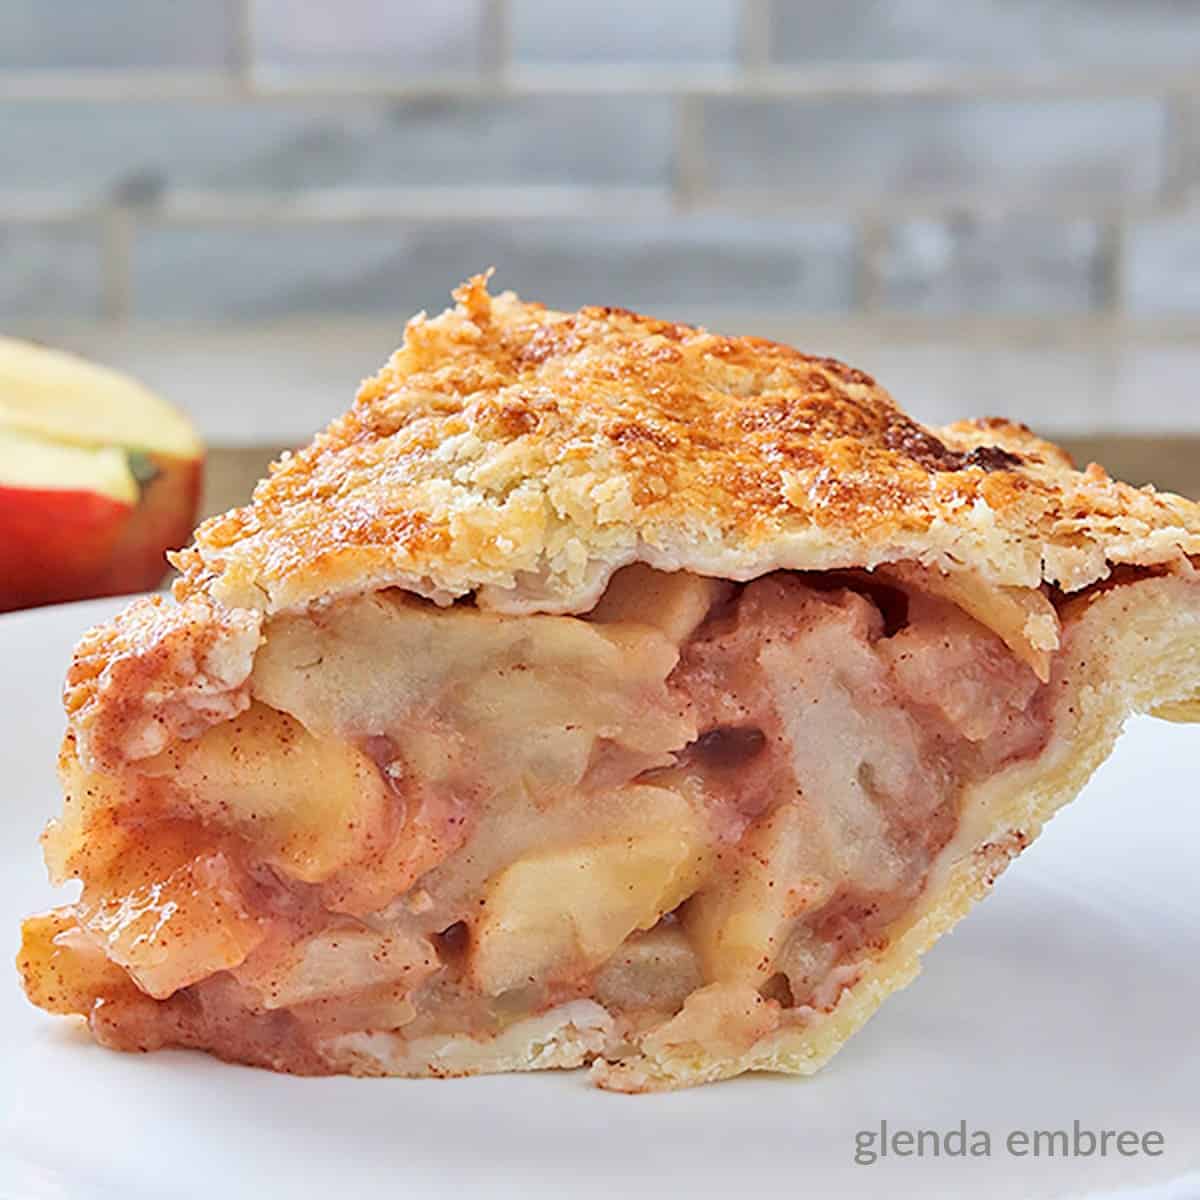 Homemade Apple Pie Recipe